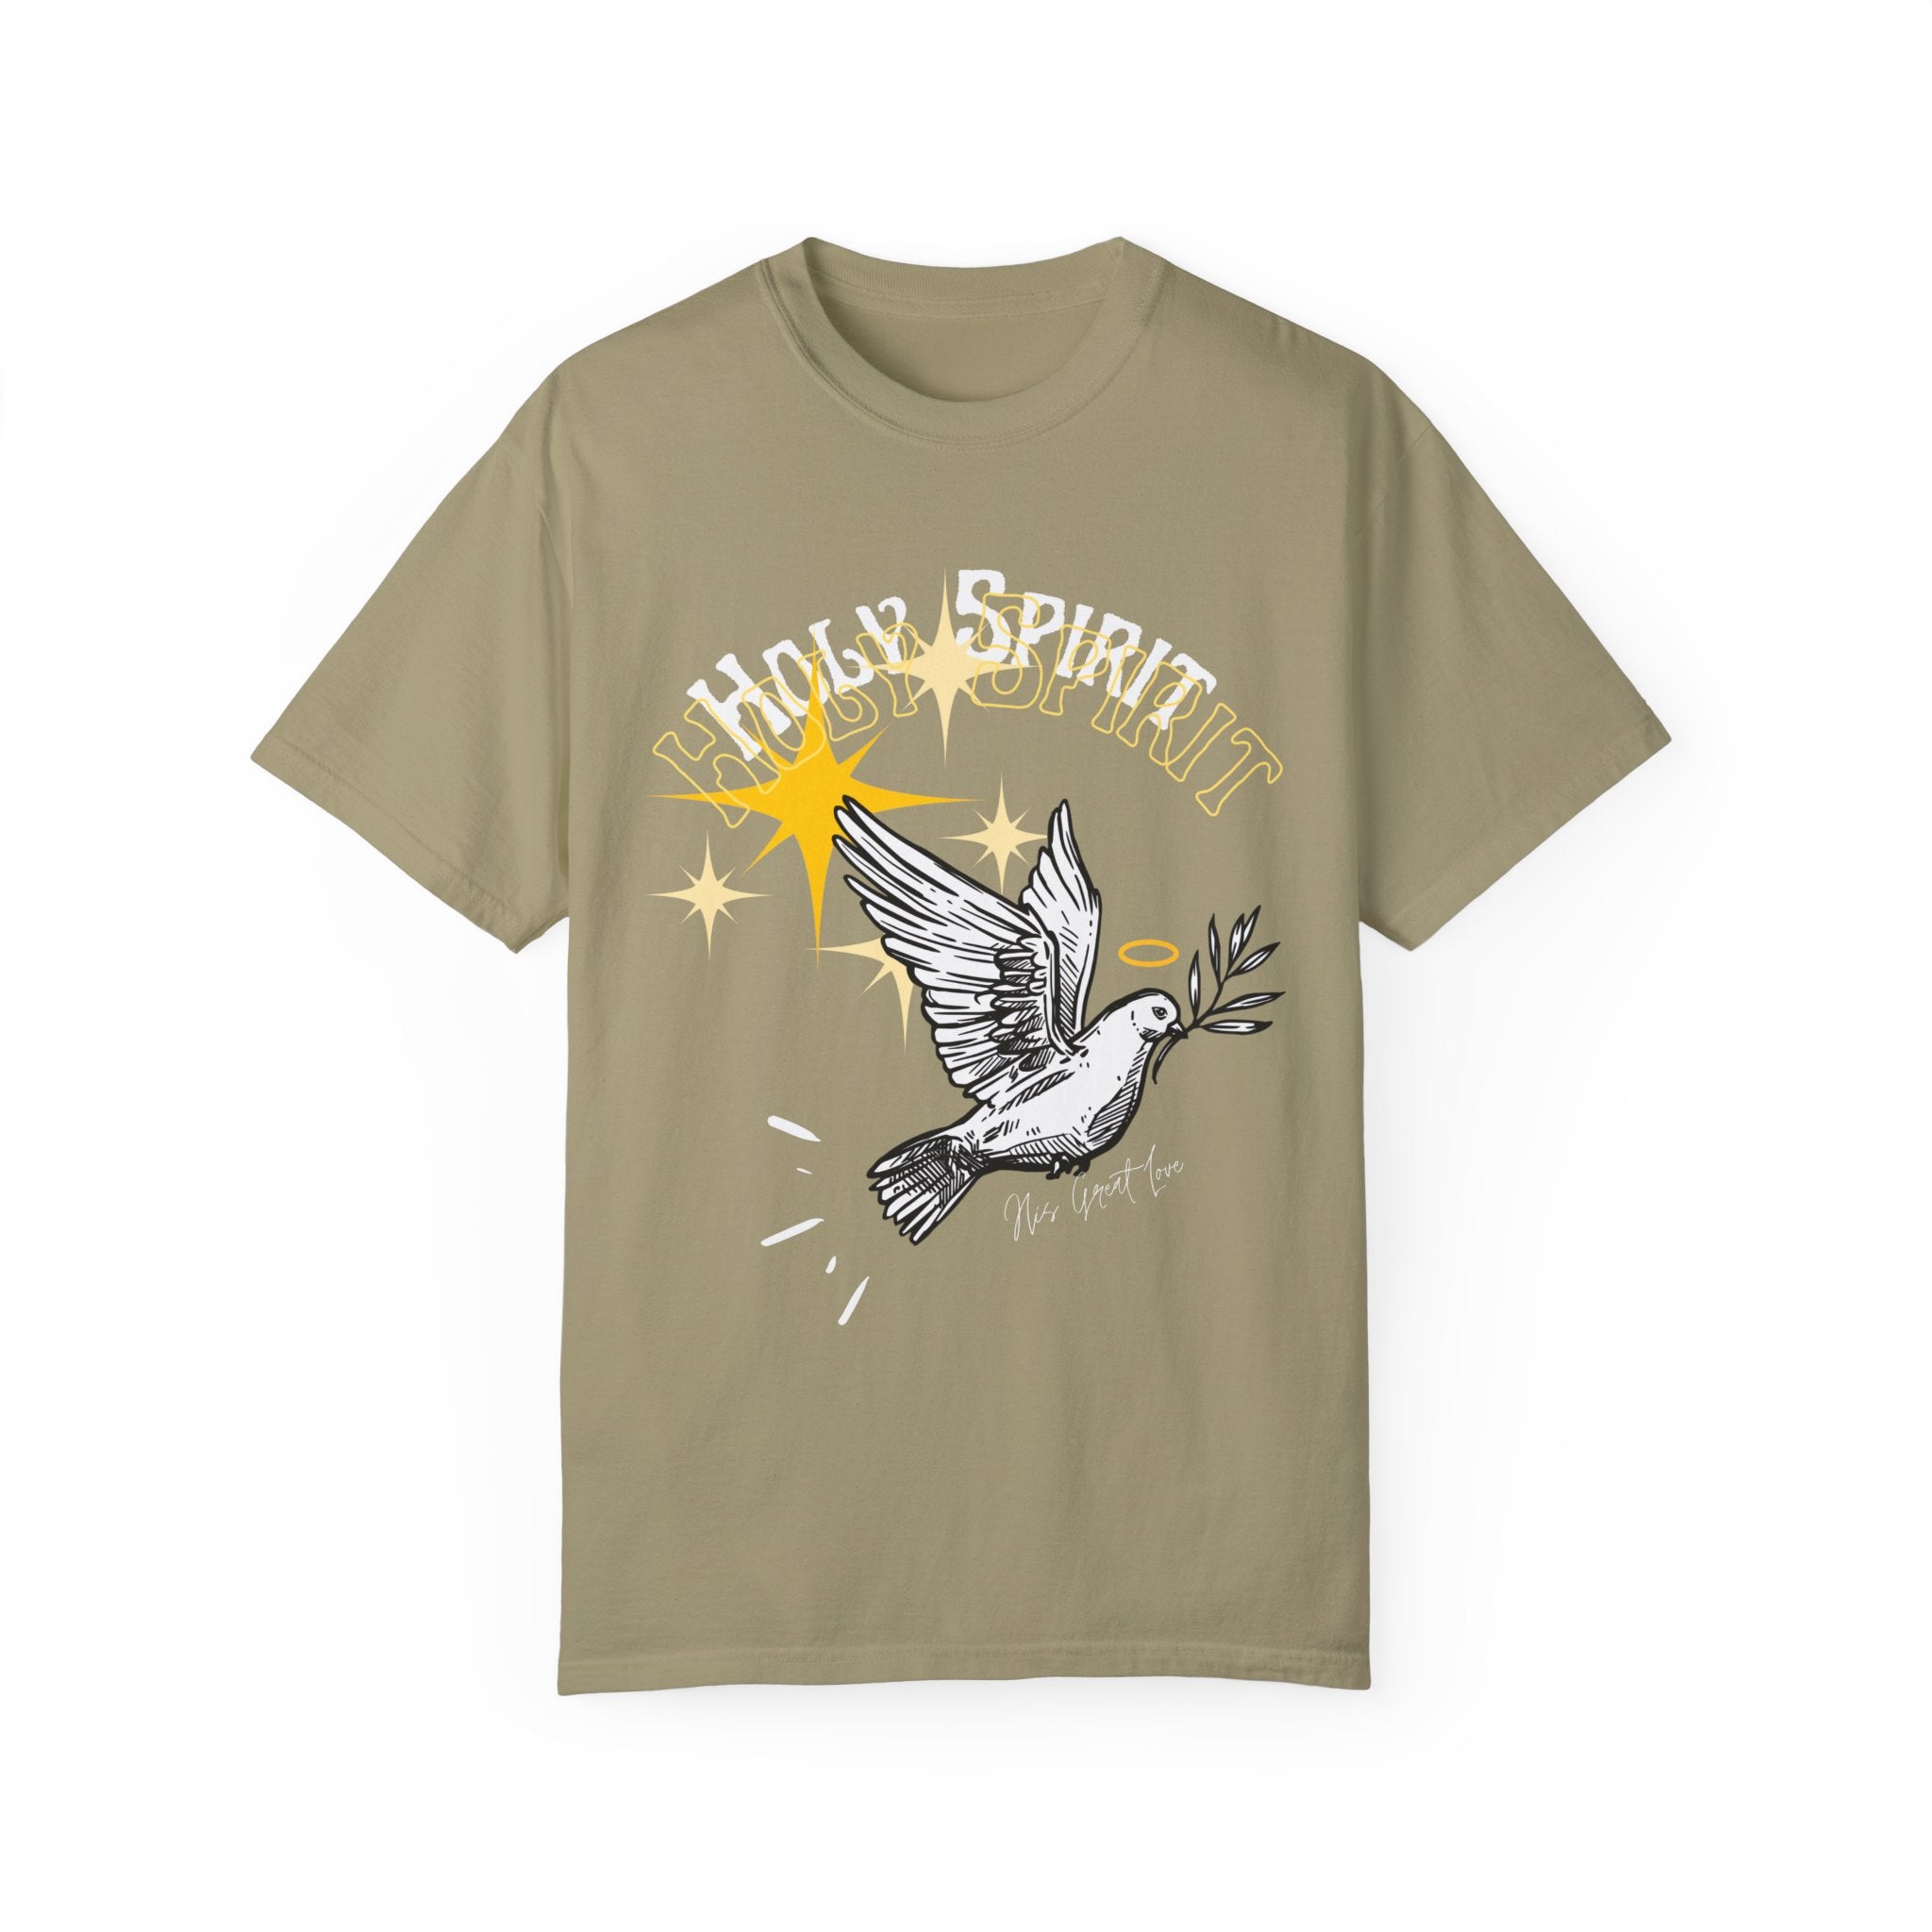 HOLY SPIRIT